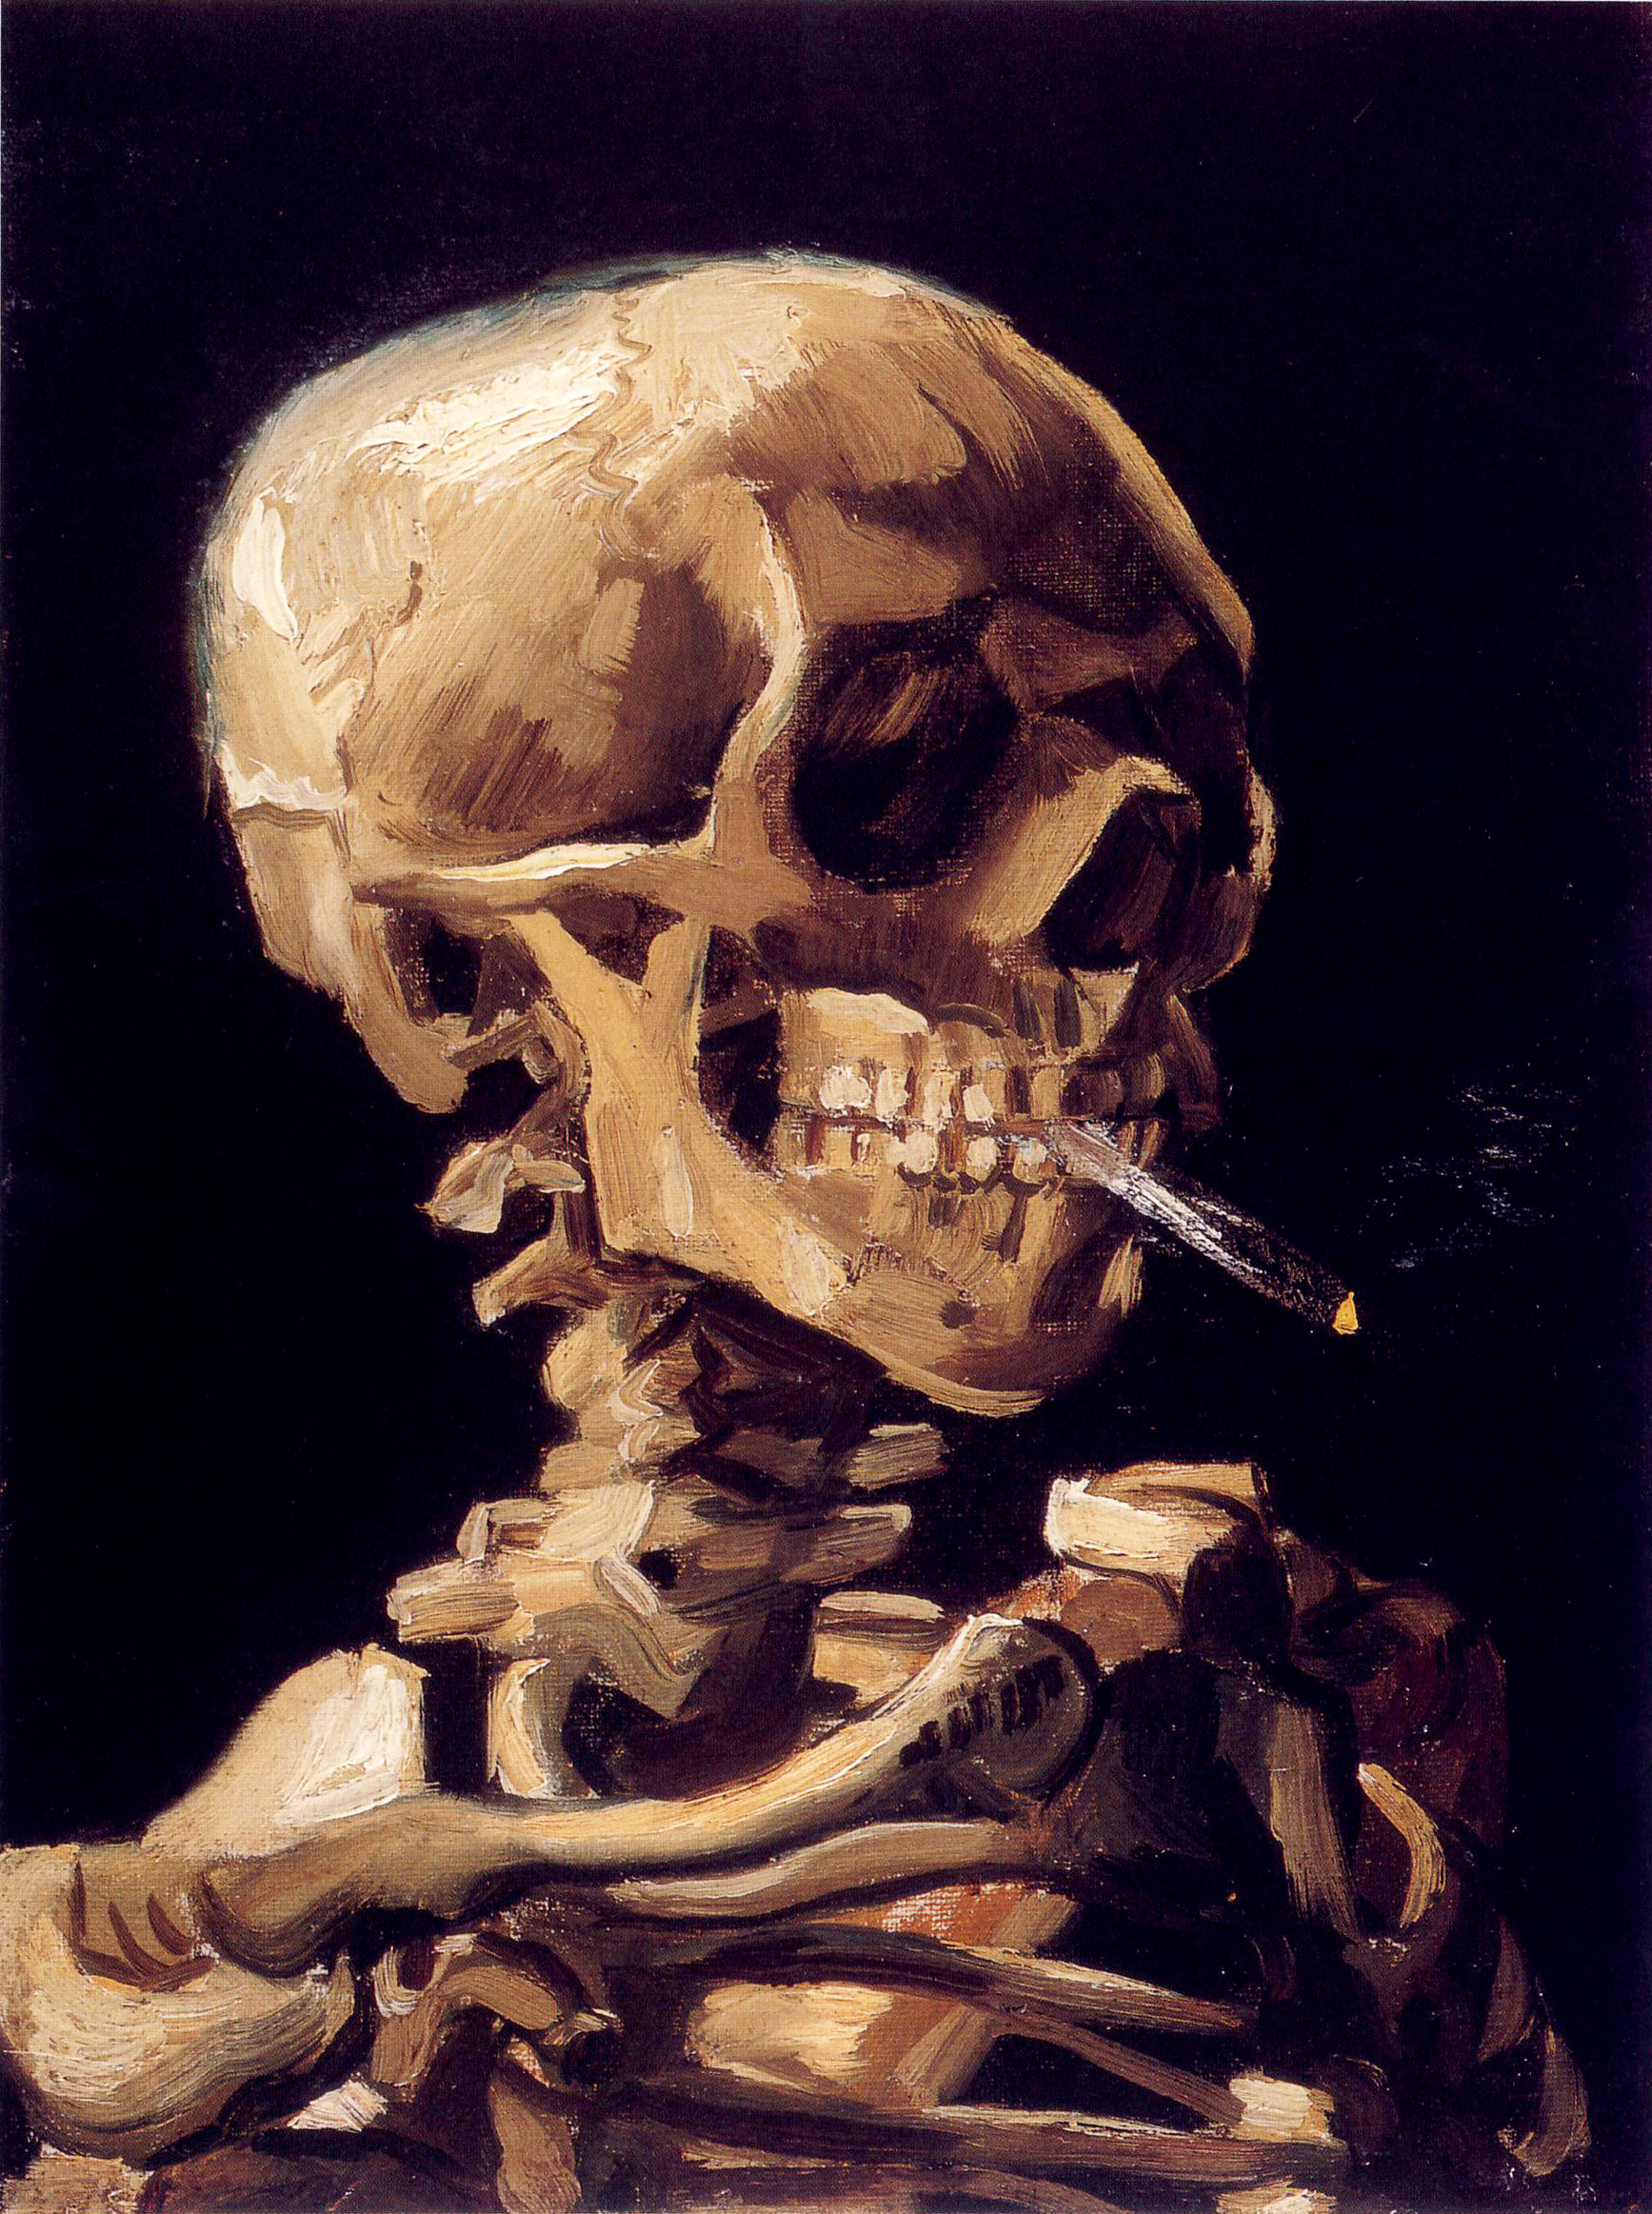 Skull of a Skeleton with Burning Cigarette (1885 or 1886) by Vincent van Gogh.